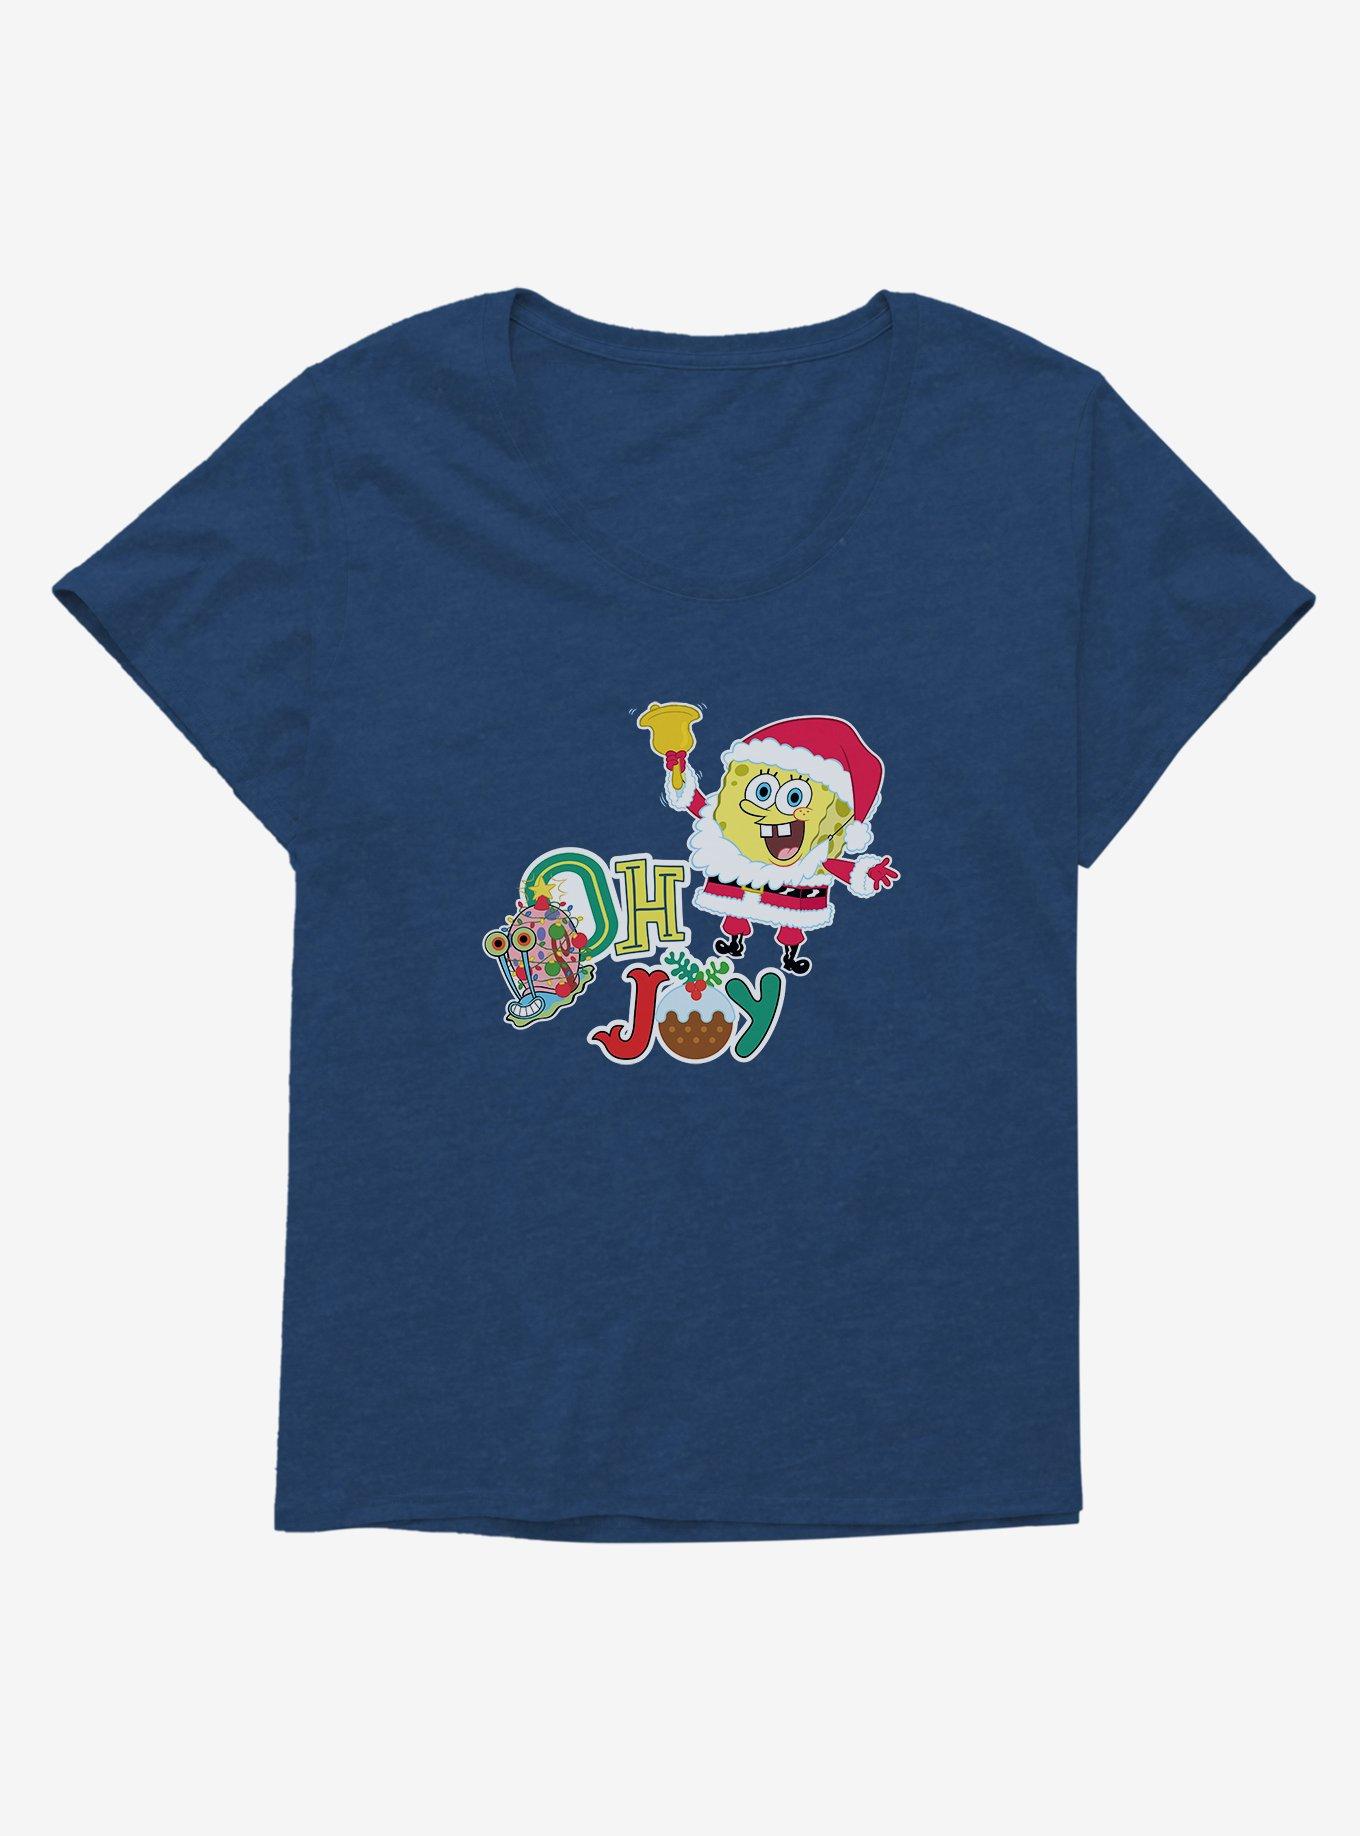 SpongeBob SquarePants Oh Joy Girls T-Shirt Plus